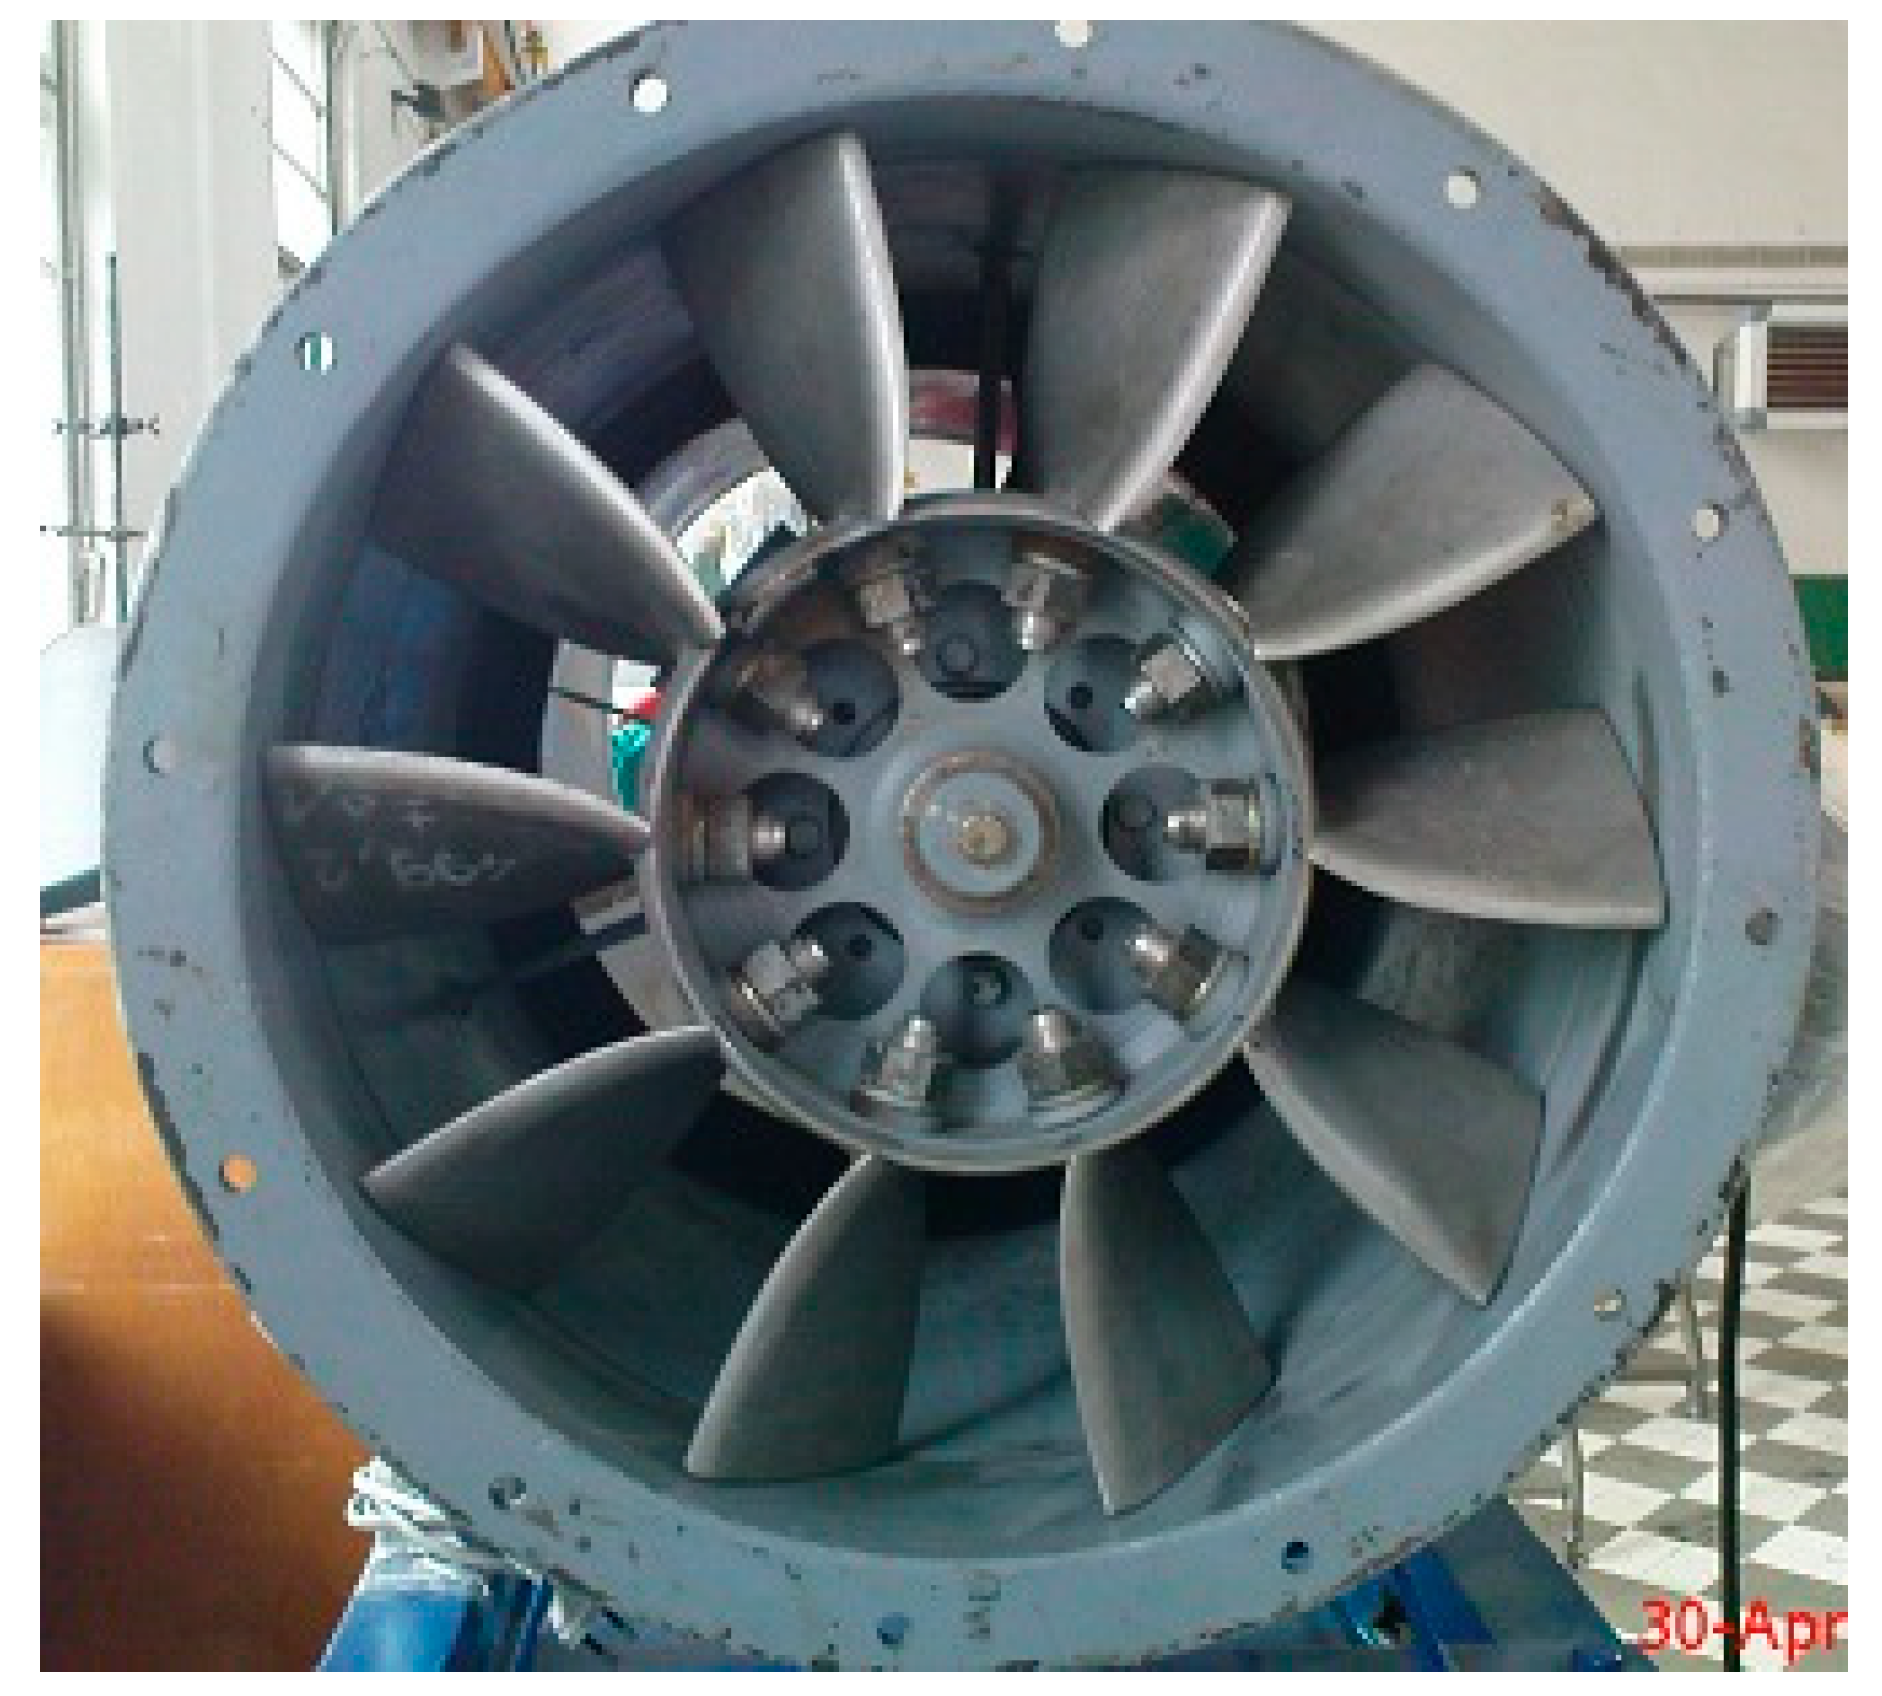 MoJet® - Next generation jet fans for tunnel ventilation